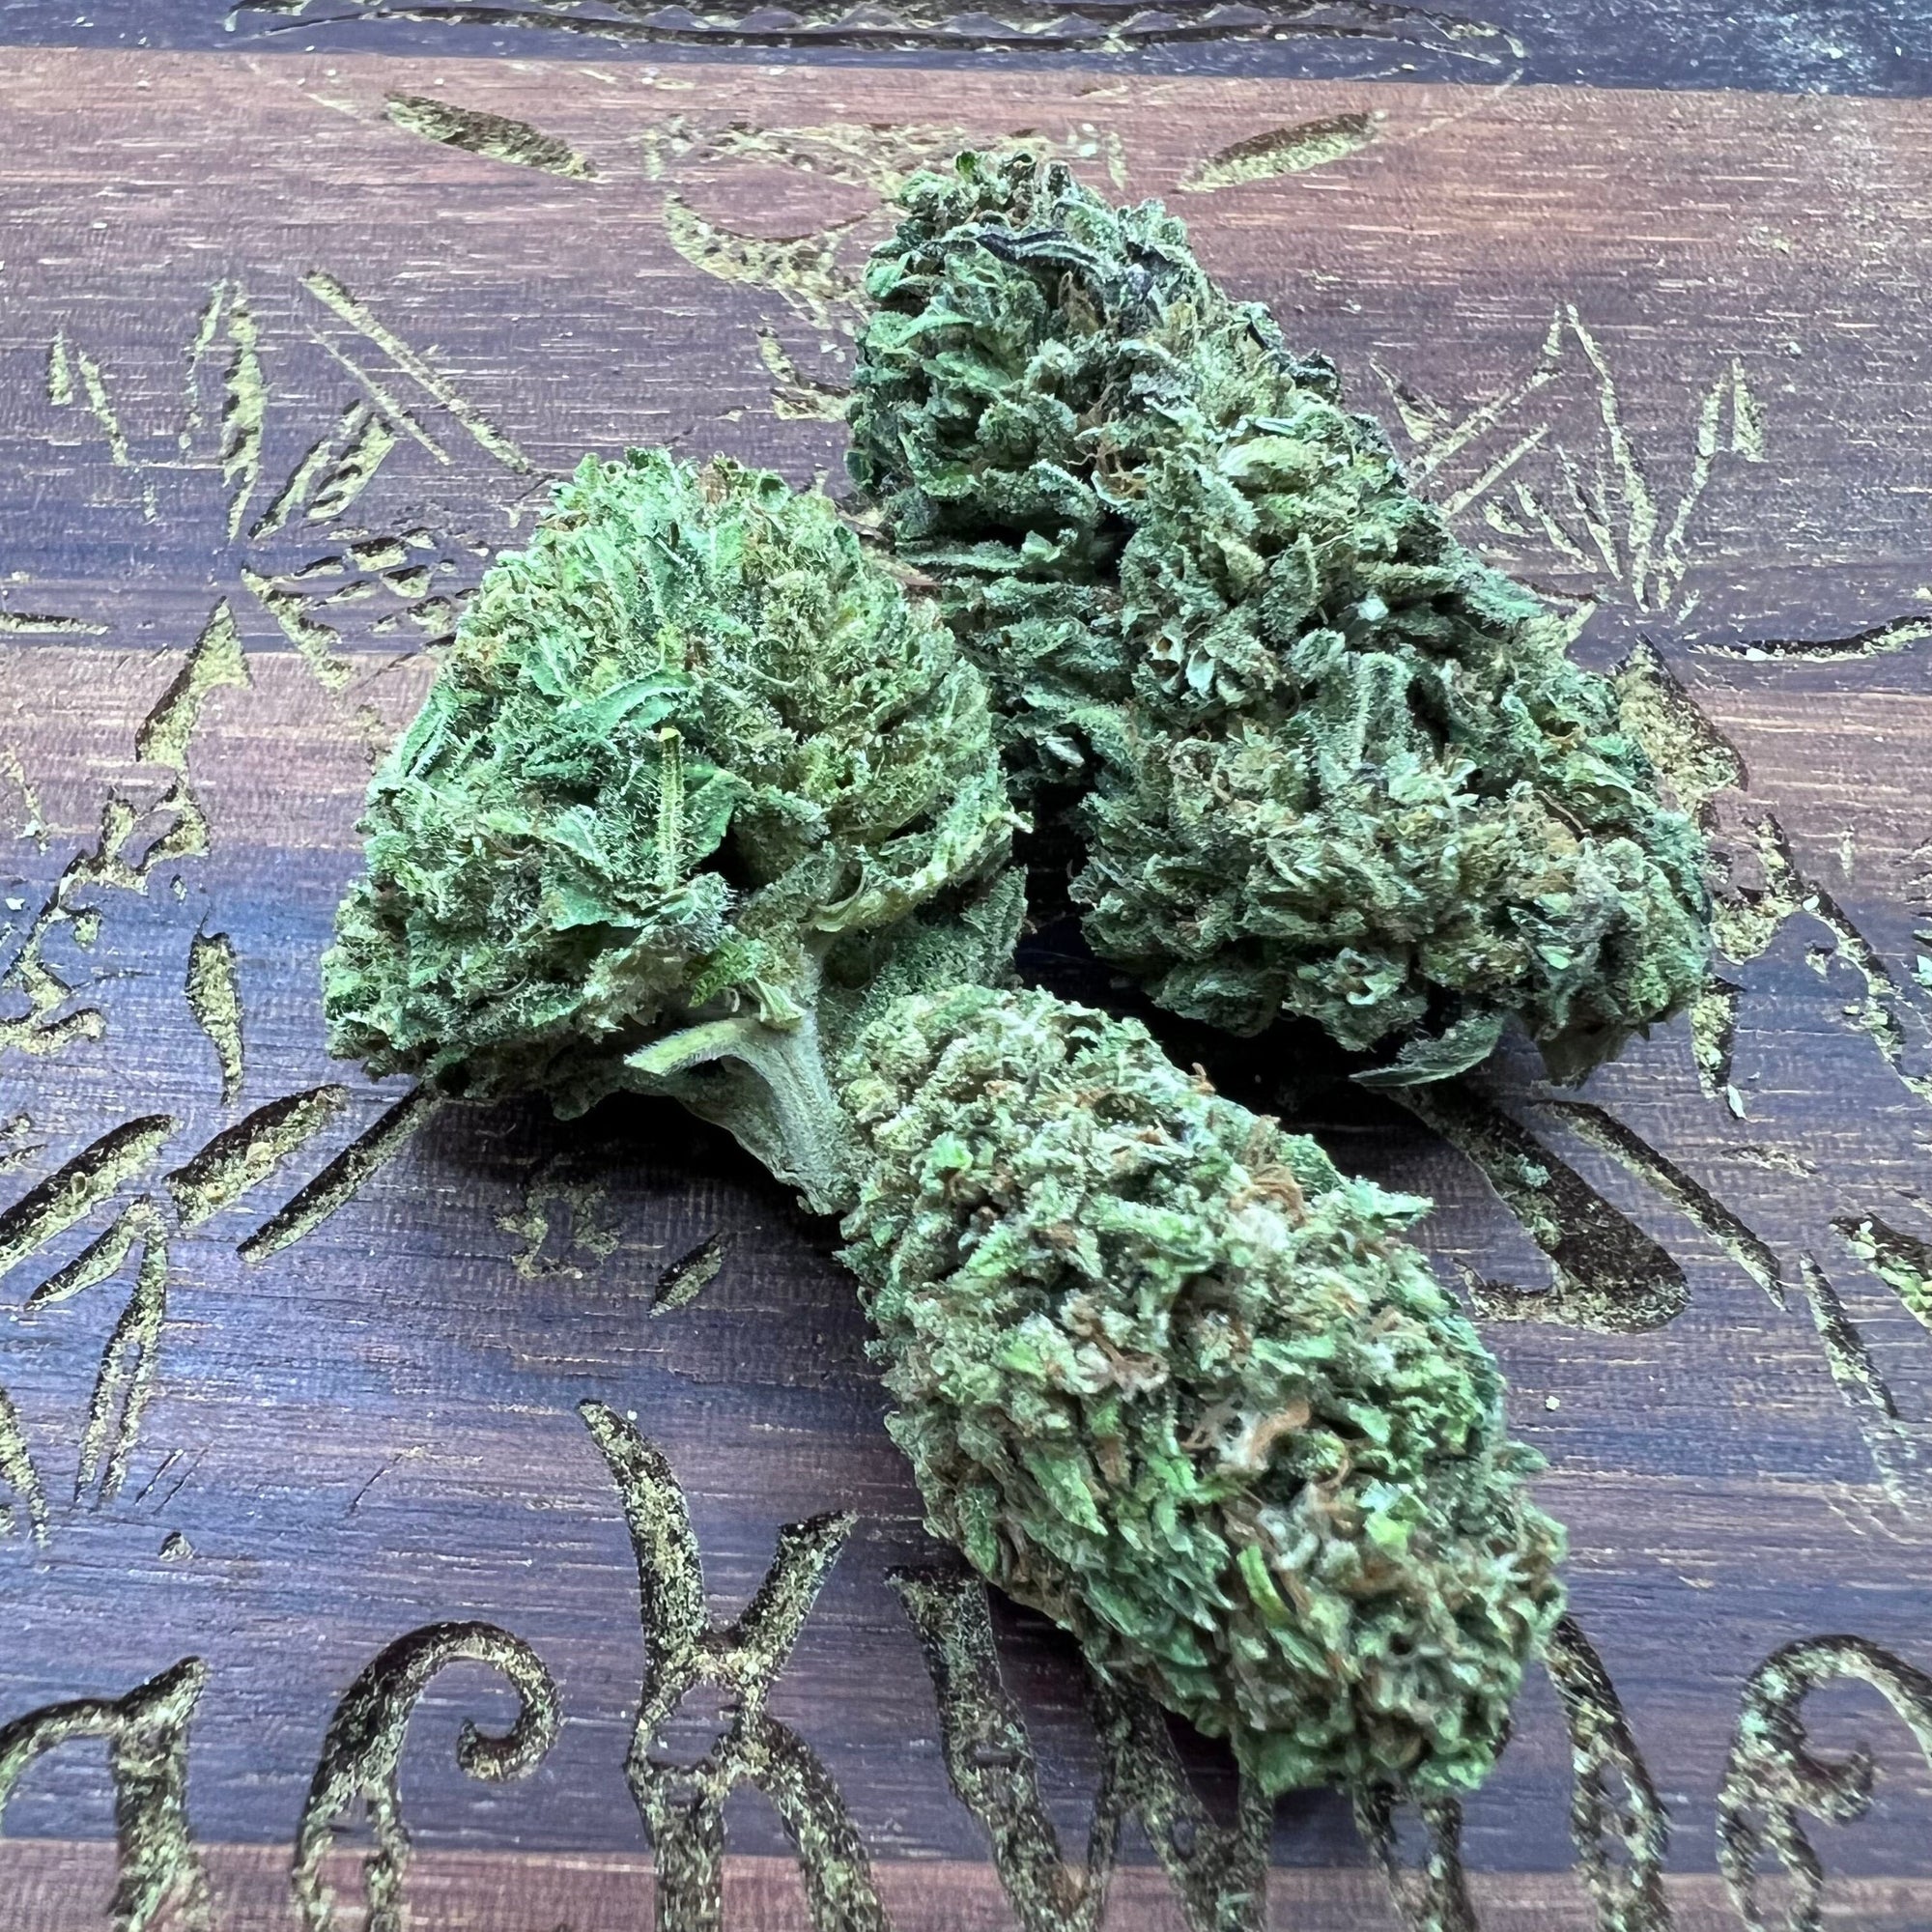 Pineapple Kush Hemp Flower - BackWoodz Cartel Cannabis 